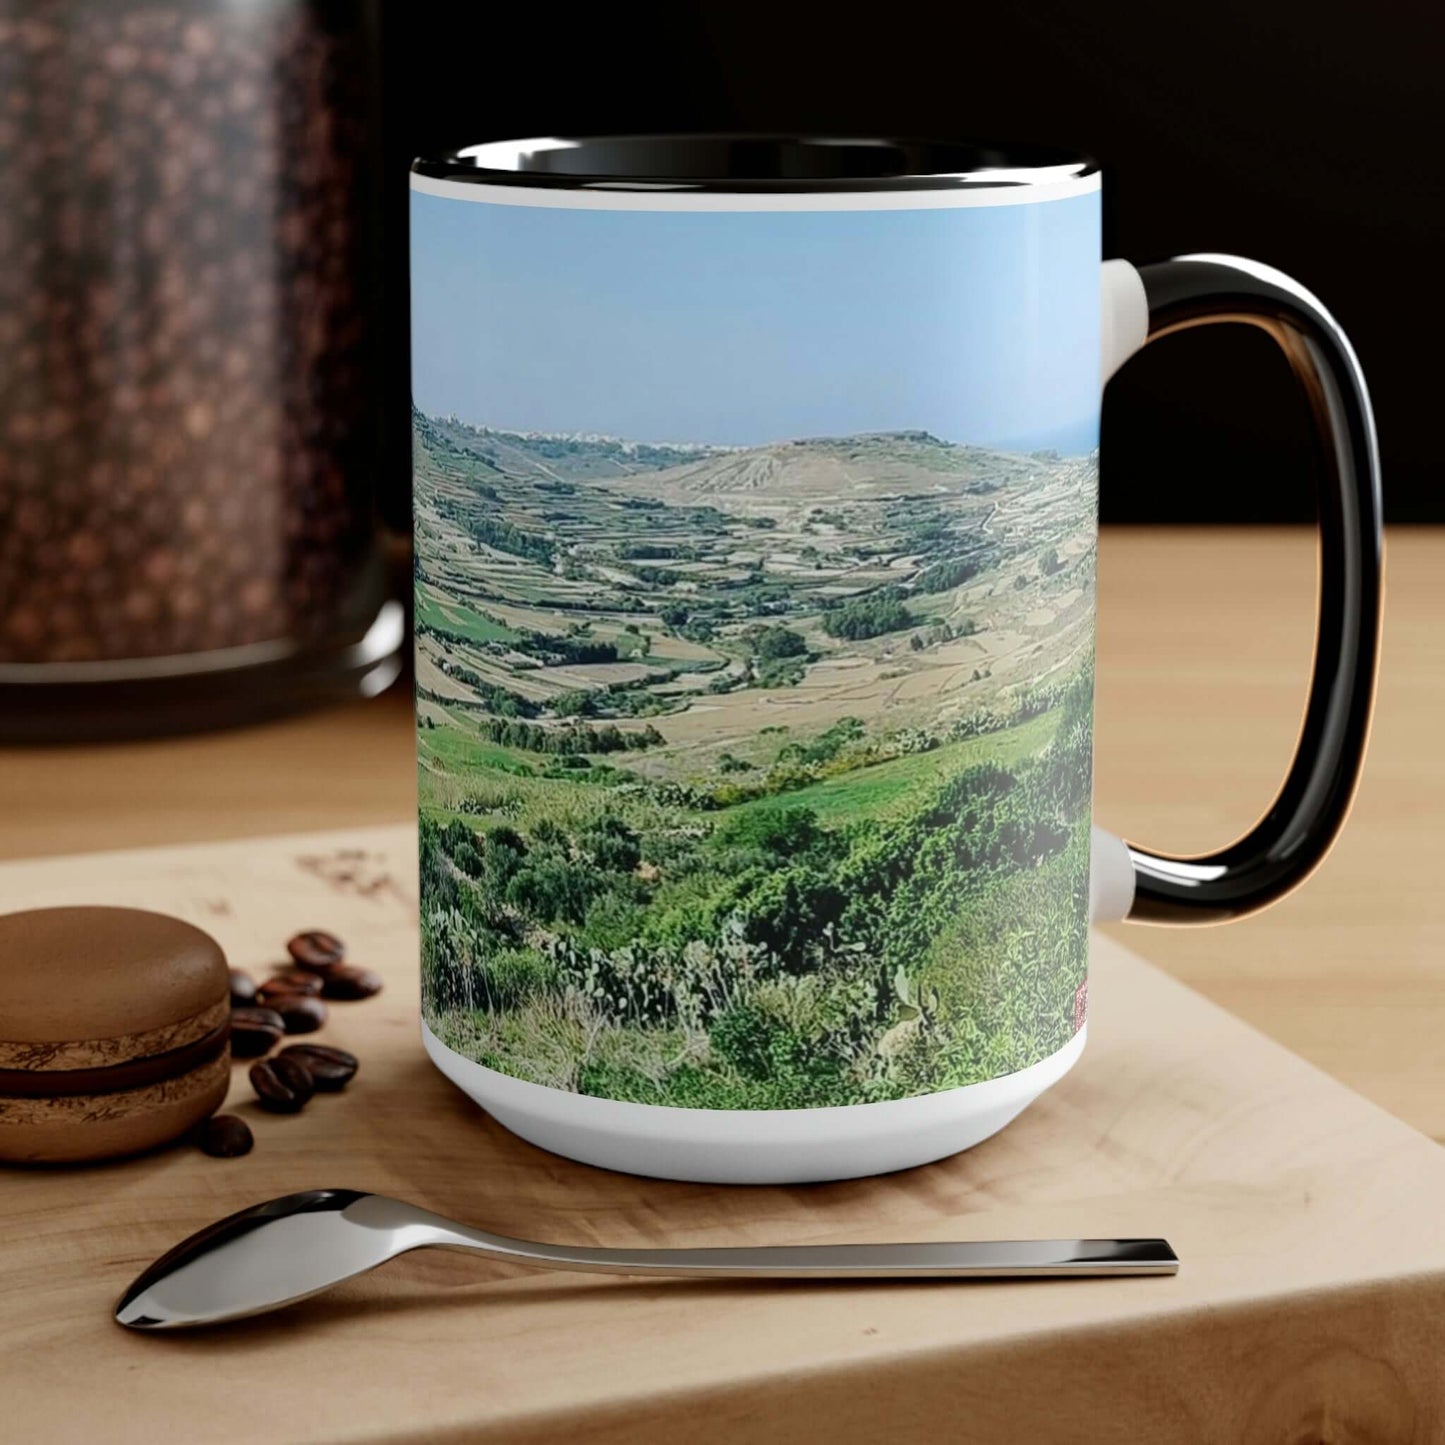 The breath taking scene | Gozo | Two-Tone Coffee Mugs, 15oz